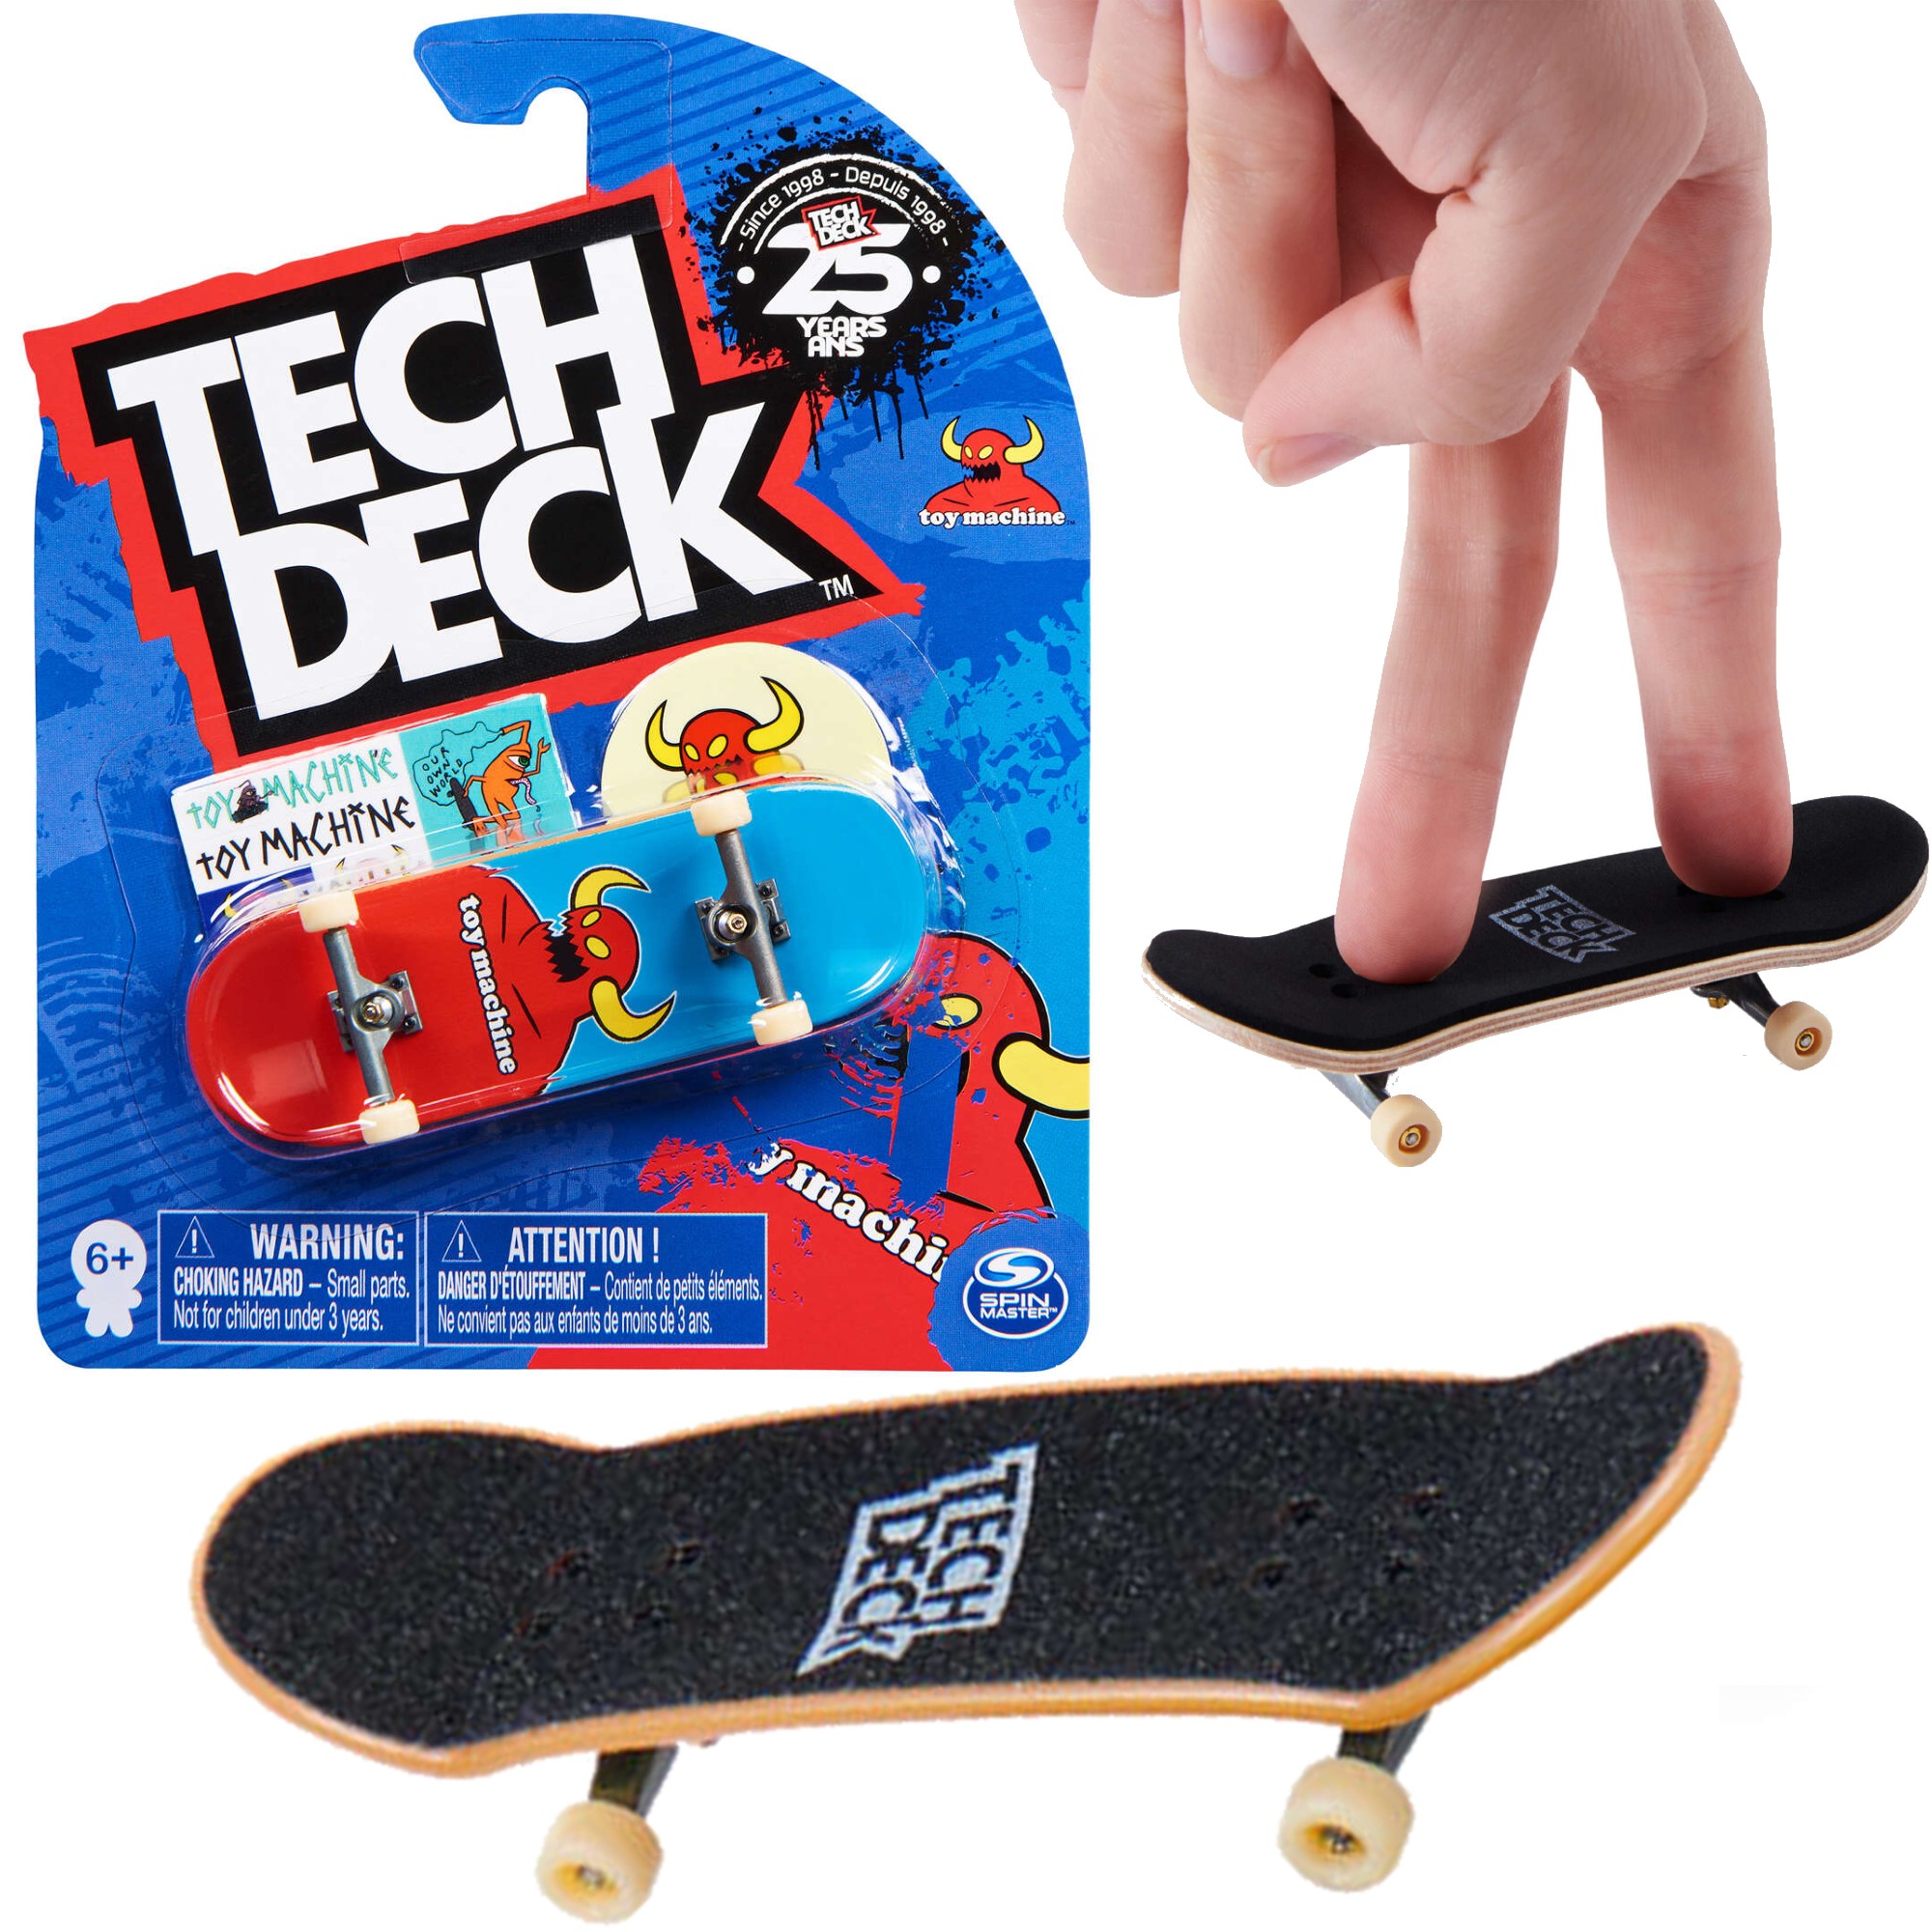 Tech Deck deskorolka fingerboard Toy Machine + naklejki